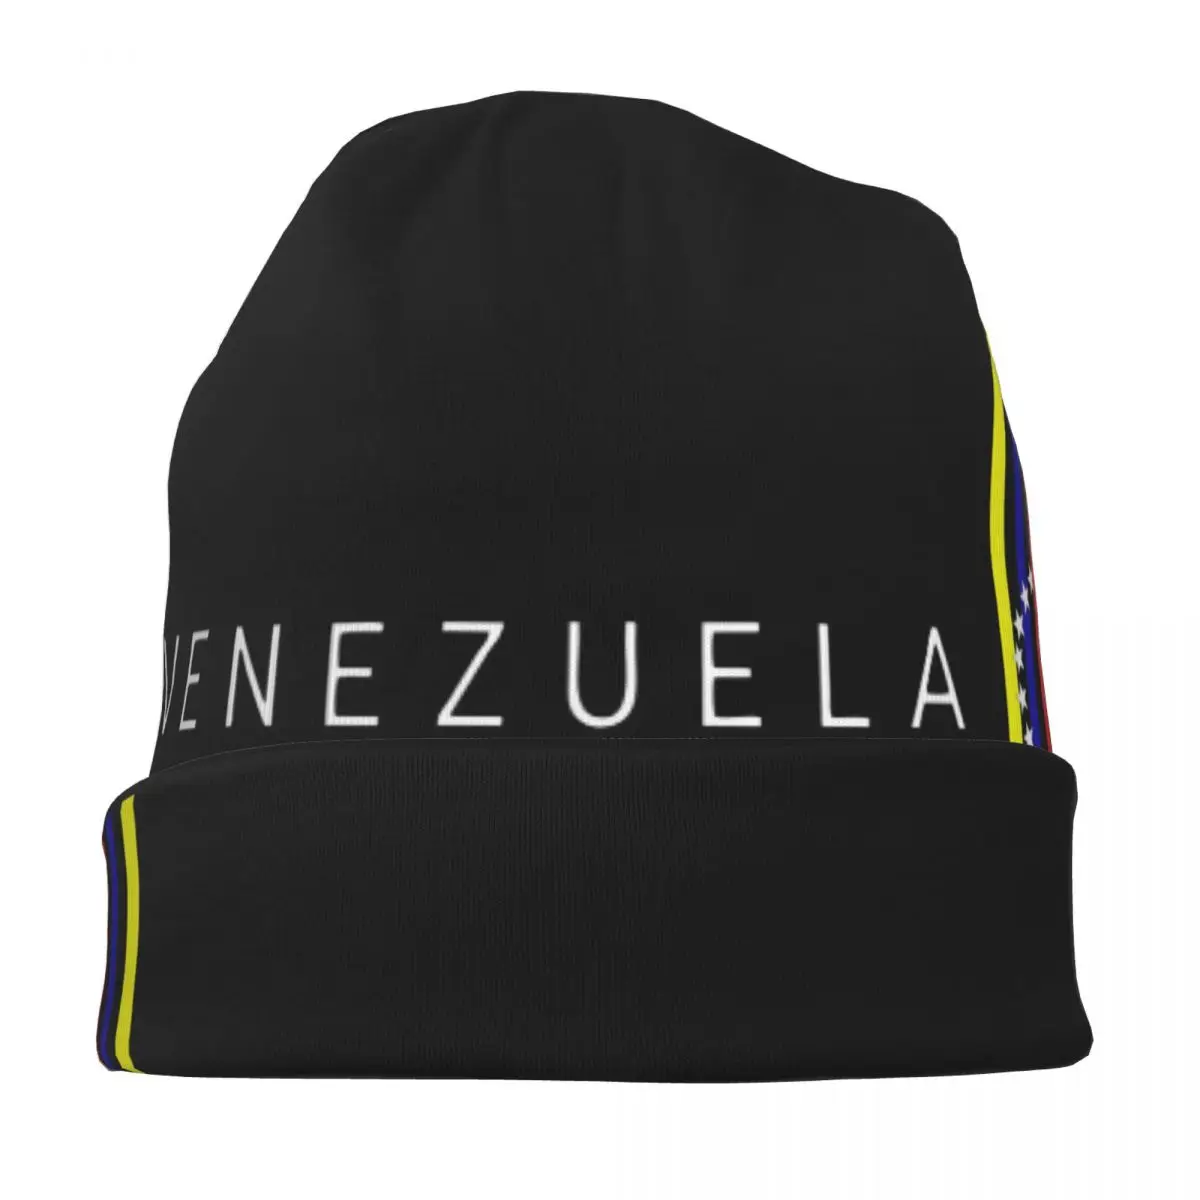 Знаме на Венецуела, Венецуела Шапка-качулка, Улични Готически Тюбетейки, Шапки, Шапки Унисекс Пролетна Шапка с Двойно предназначение